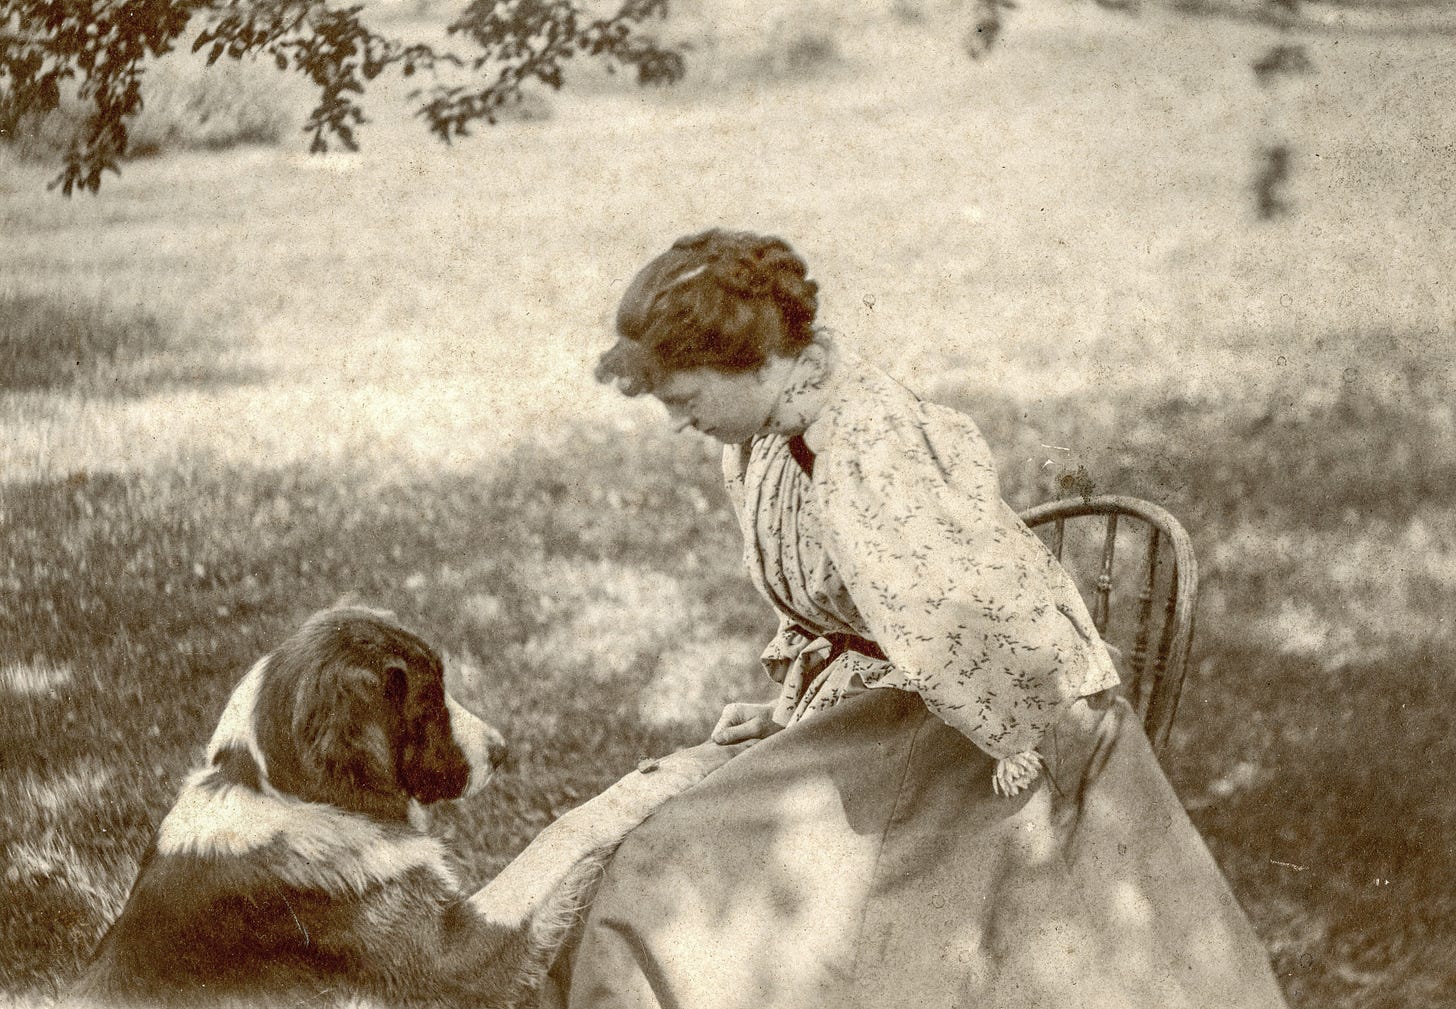 Mary Jane with dog